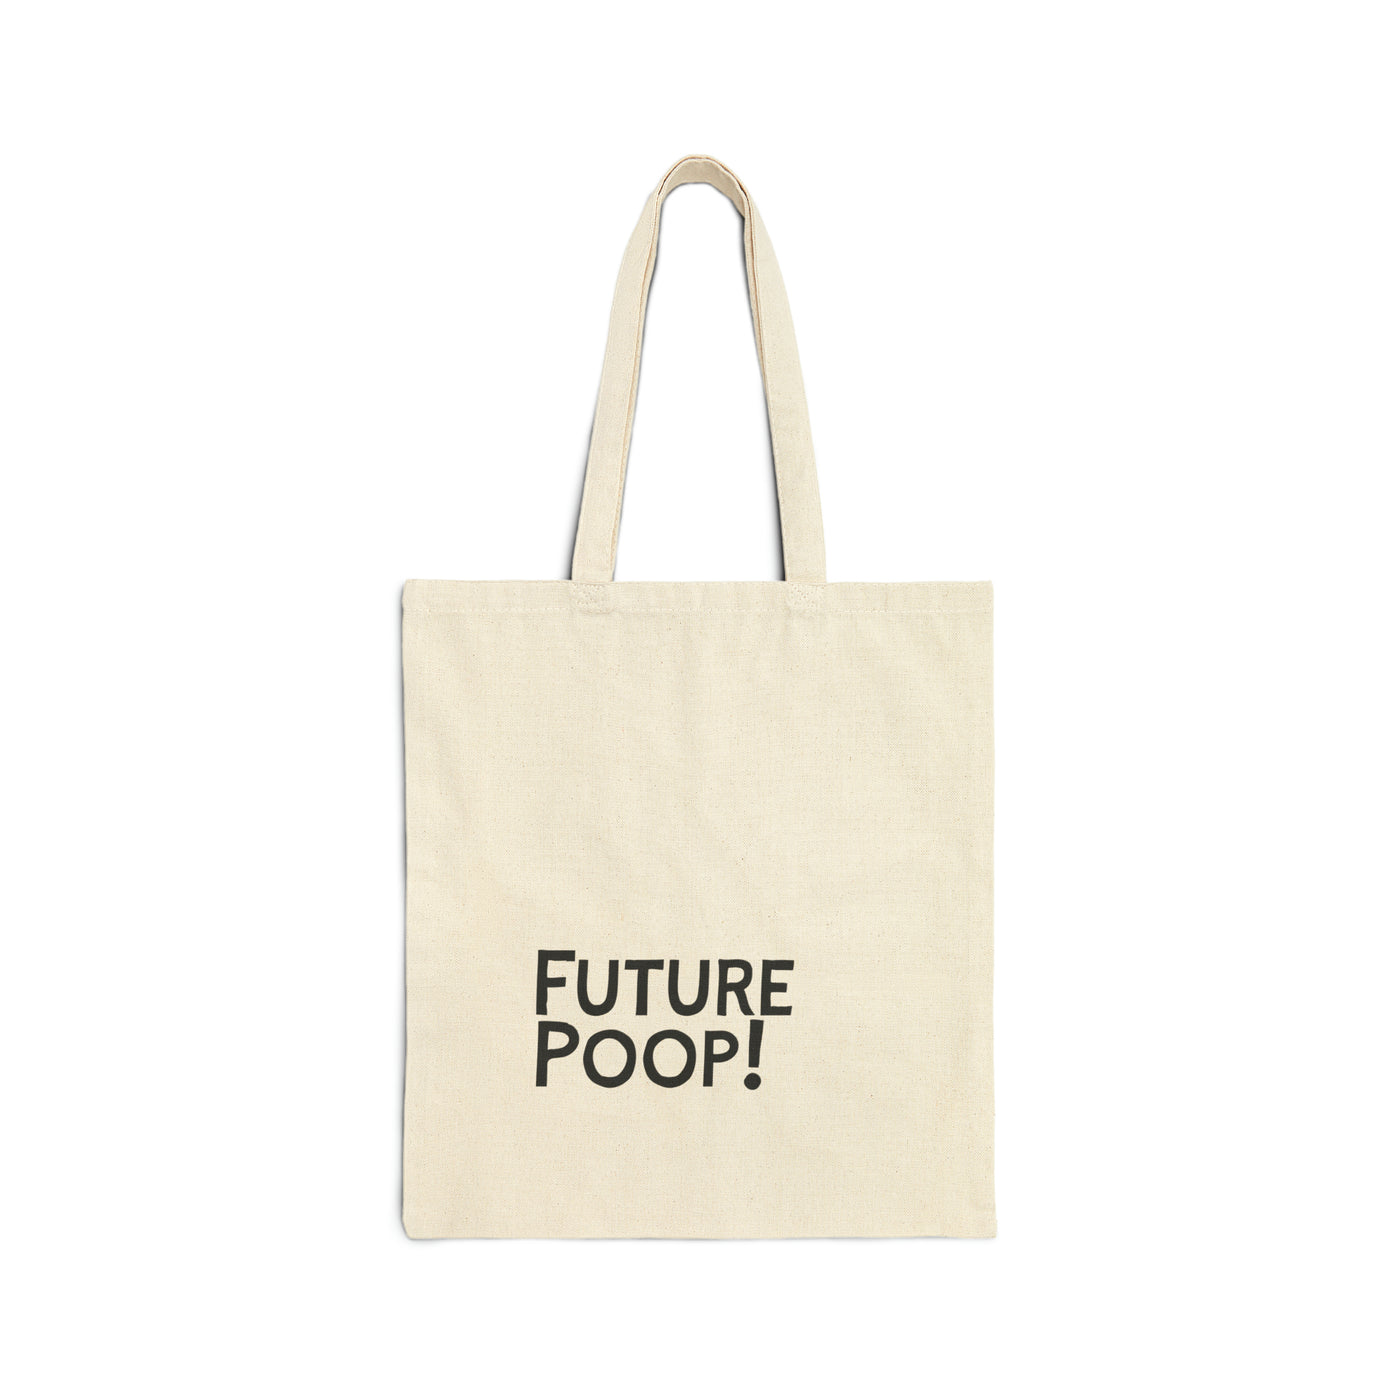 Future Poop!